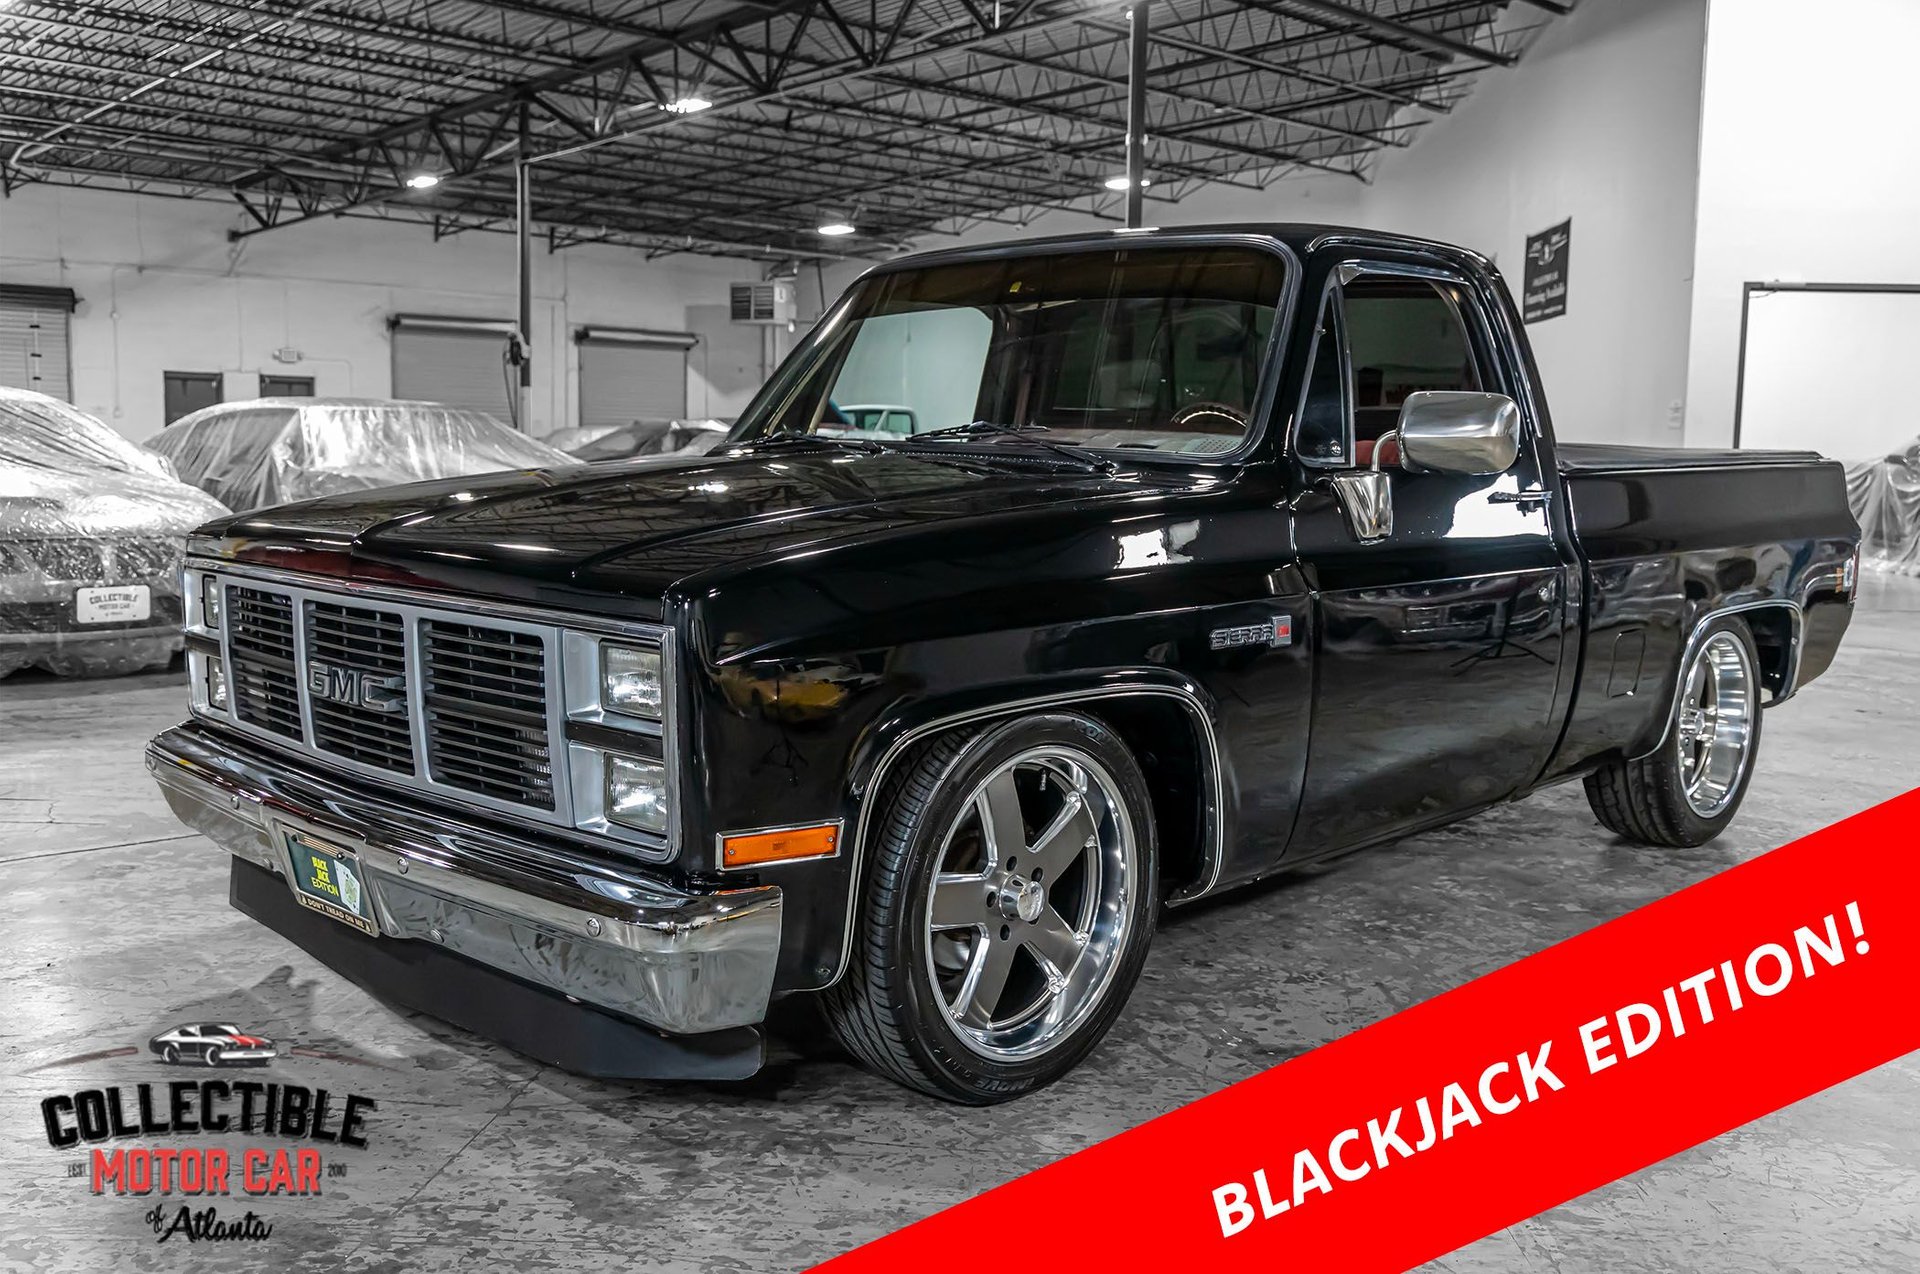 1984 gmc c1500 black jack edition